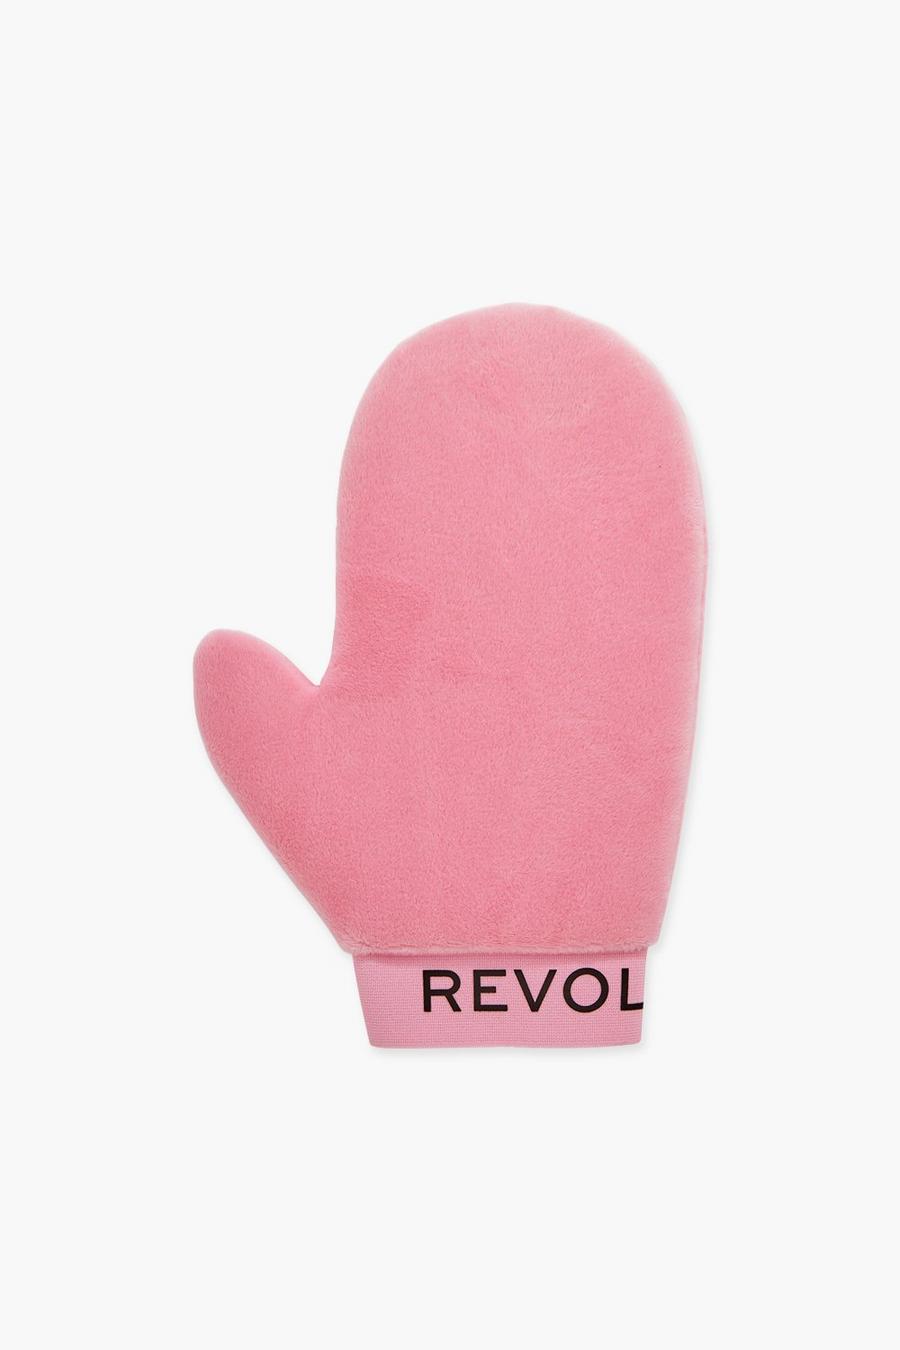 Revolution Beauty Tanning Handschuh Pink